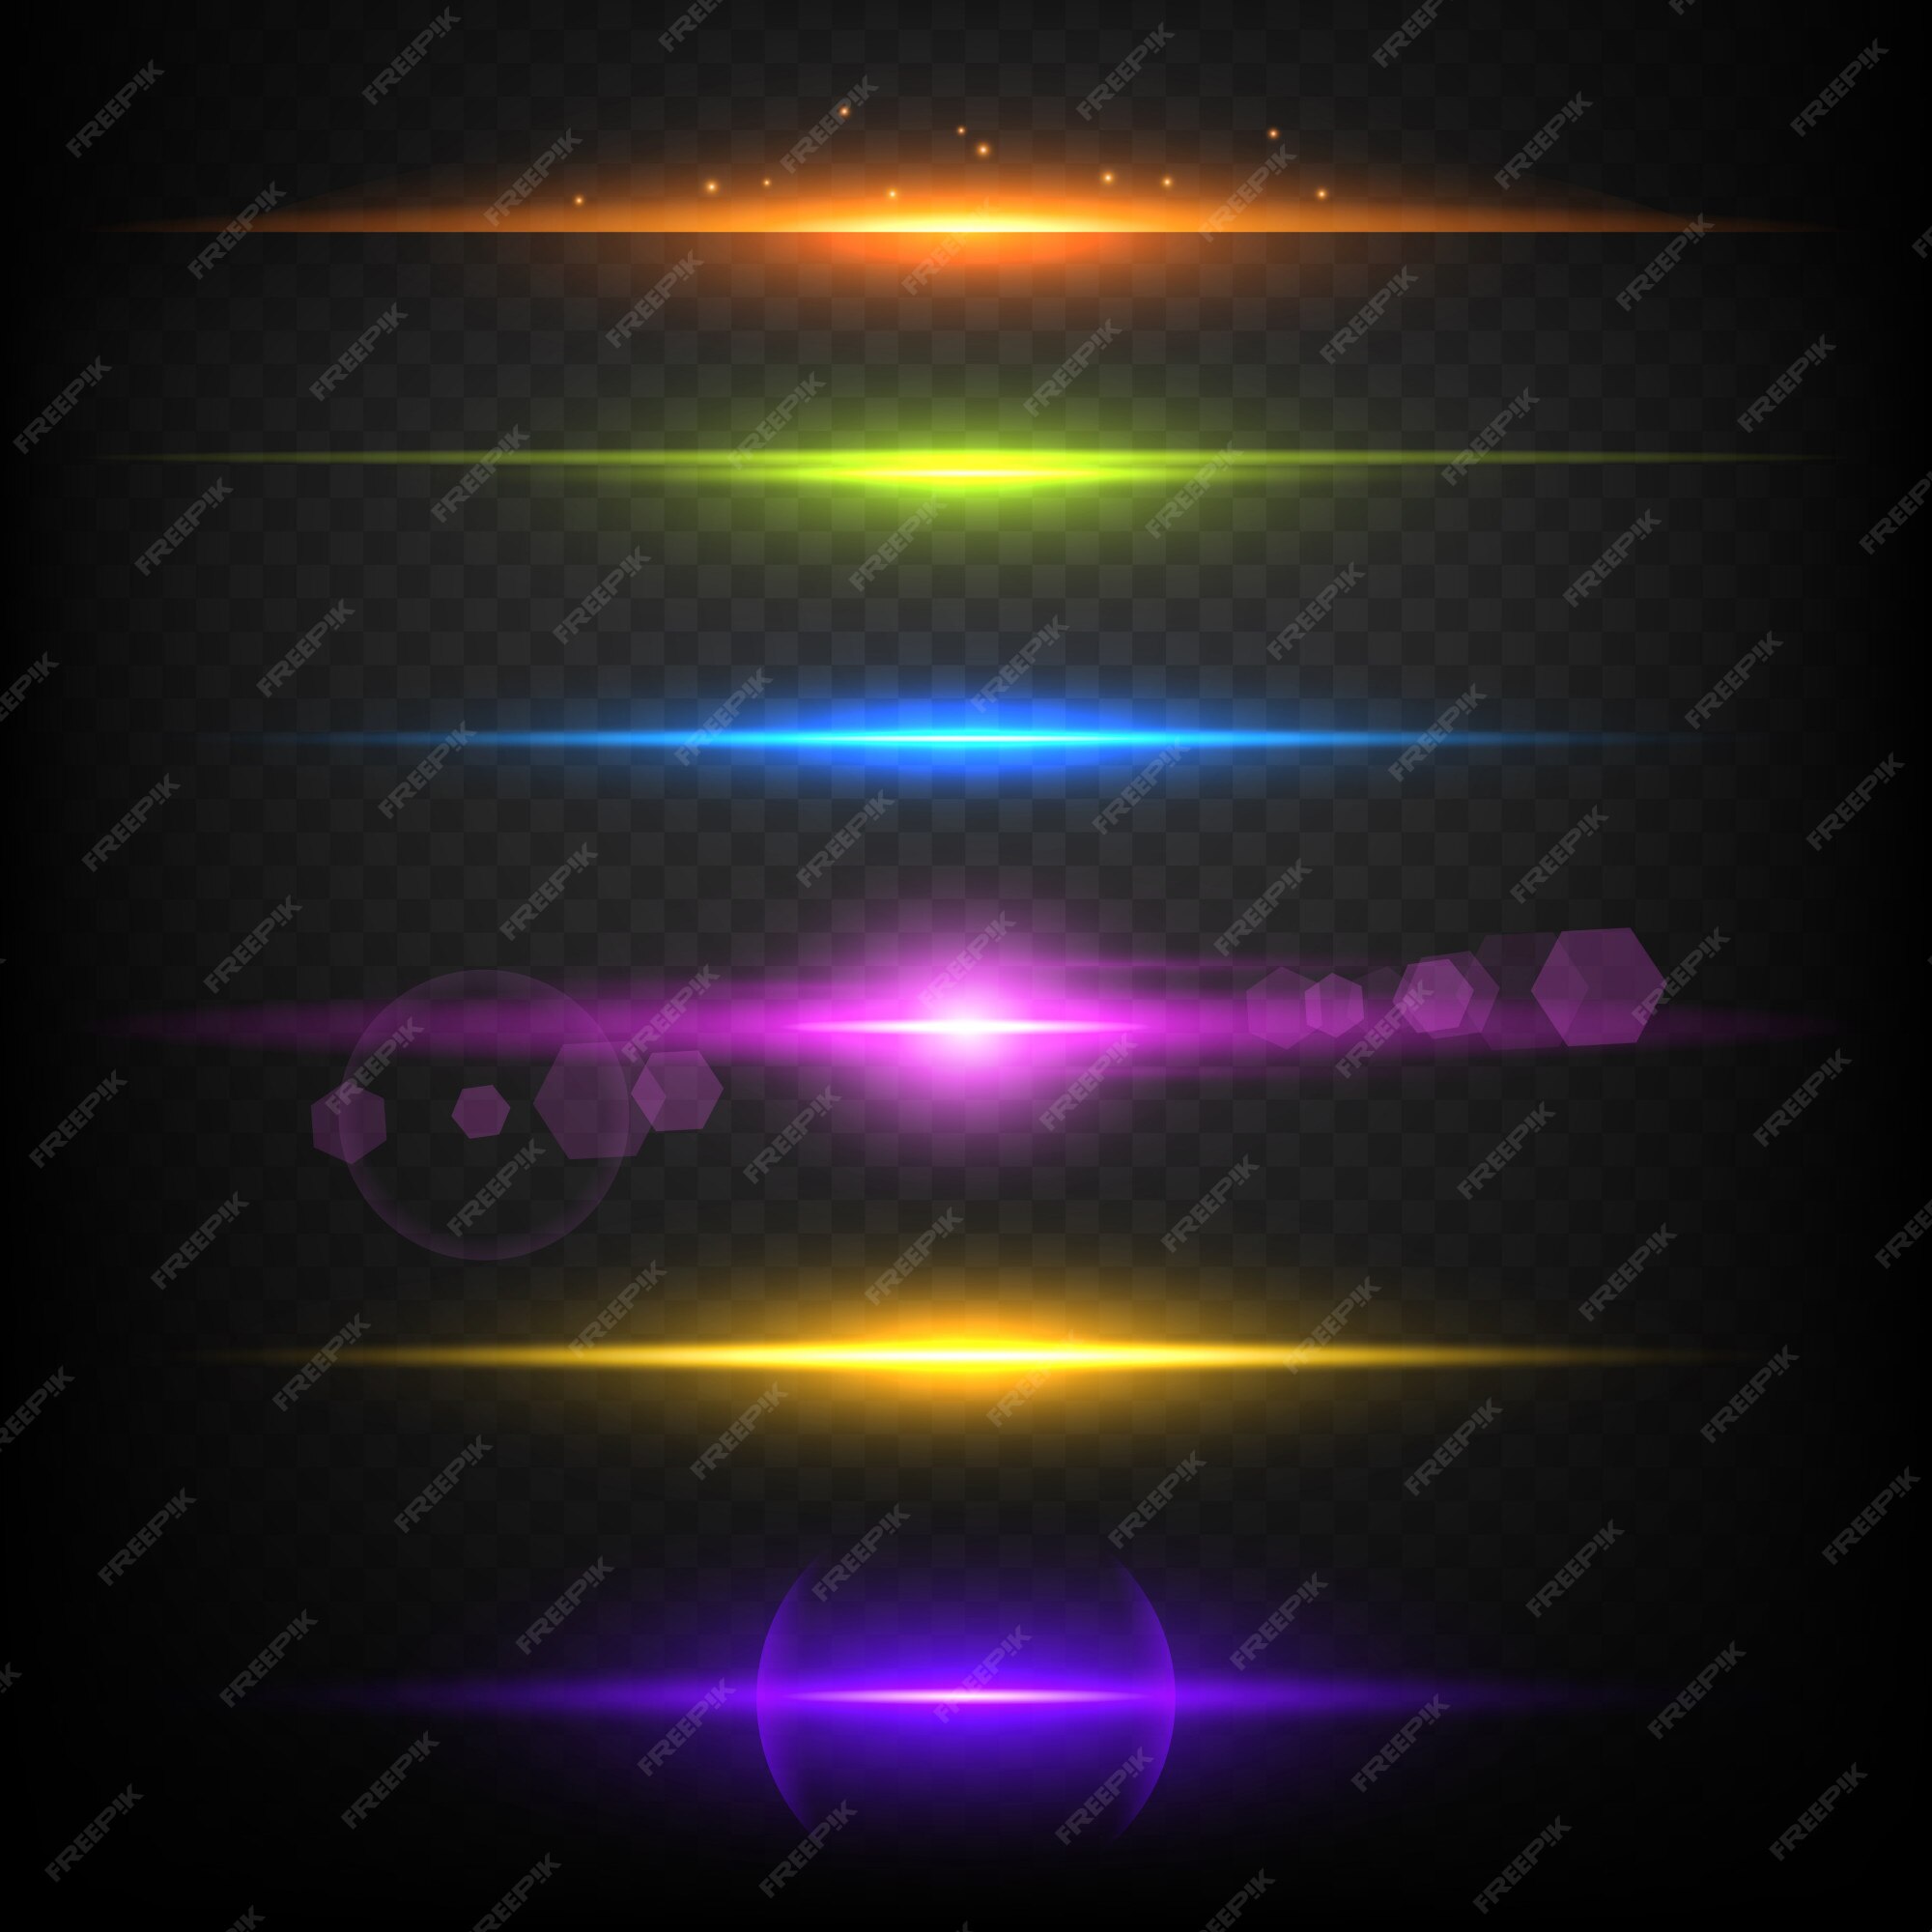 Glow Effect Images - Free Download on Freepik